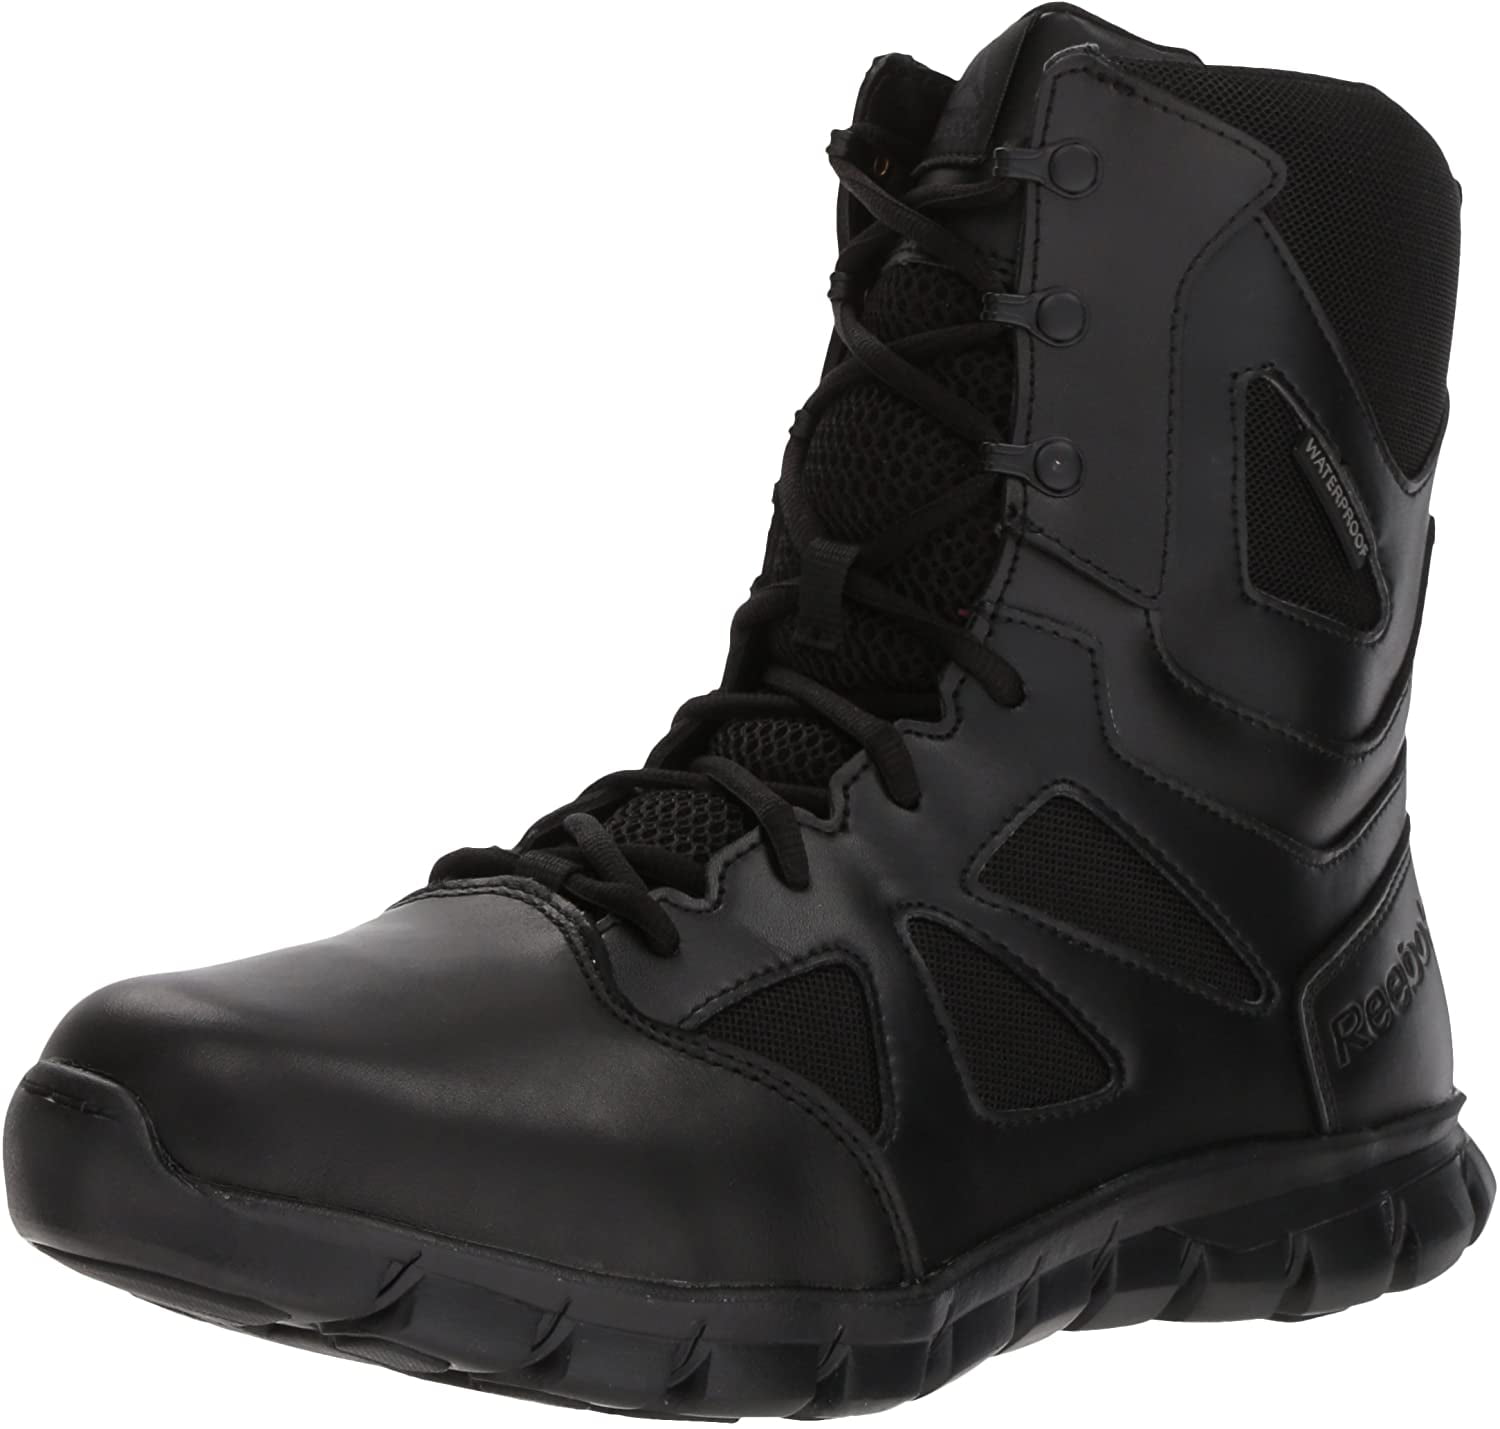 reebok military boots